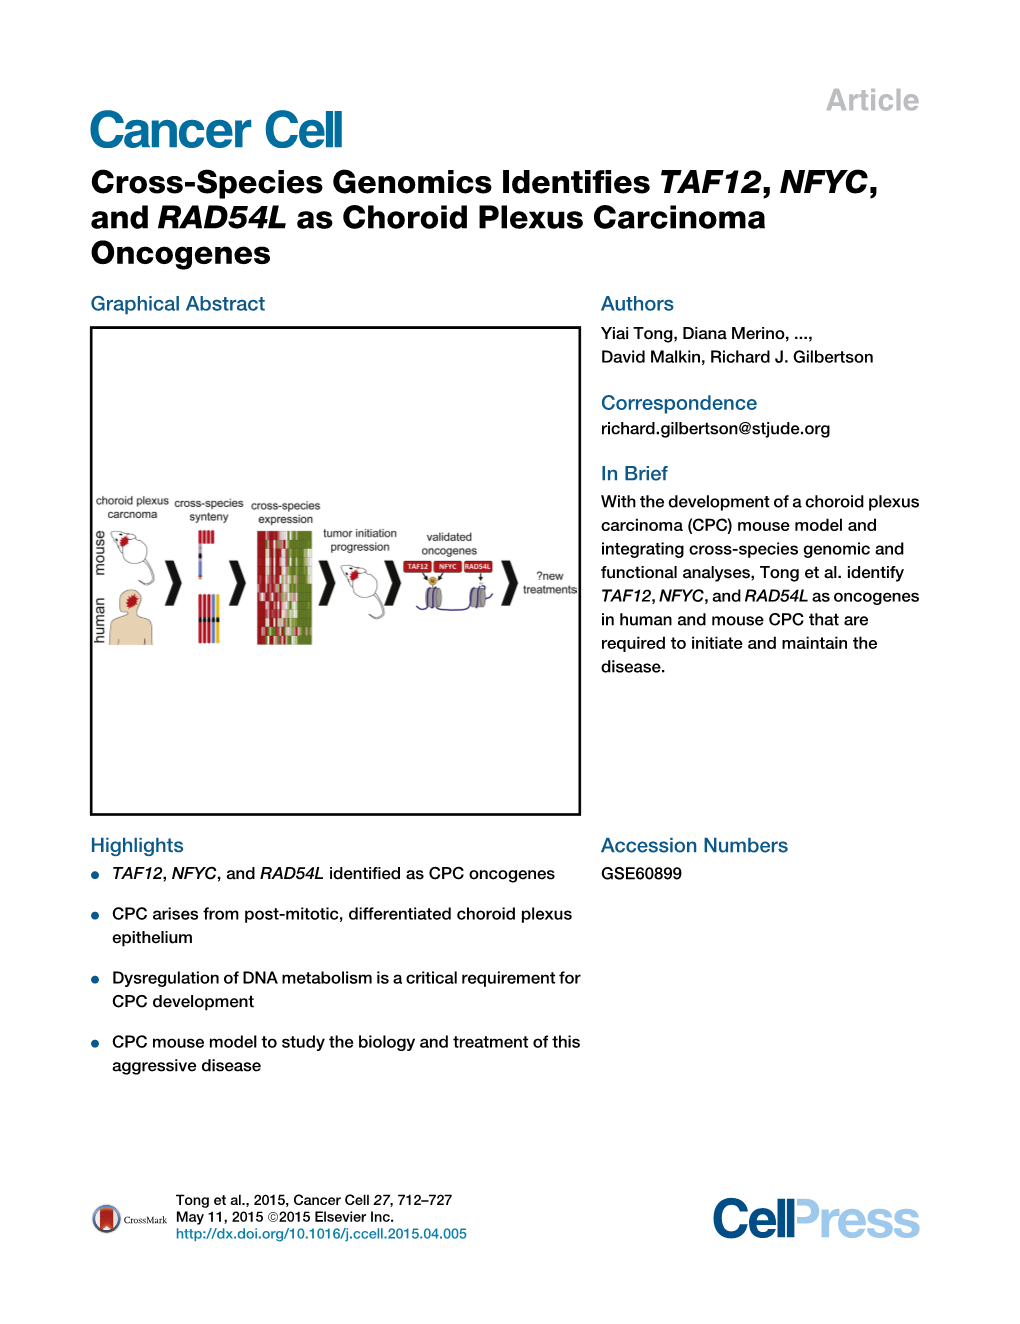 Cross-Species Genomics Identifies TAF12, NFYC, and RAD54L As Choroid Plexus Carcinoma Oncogenes